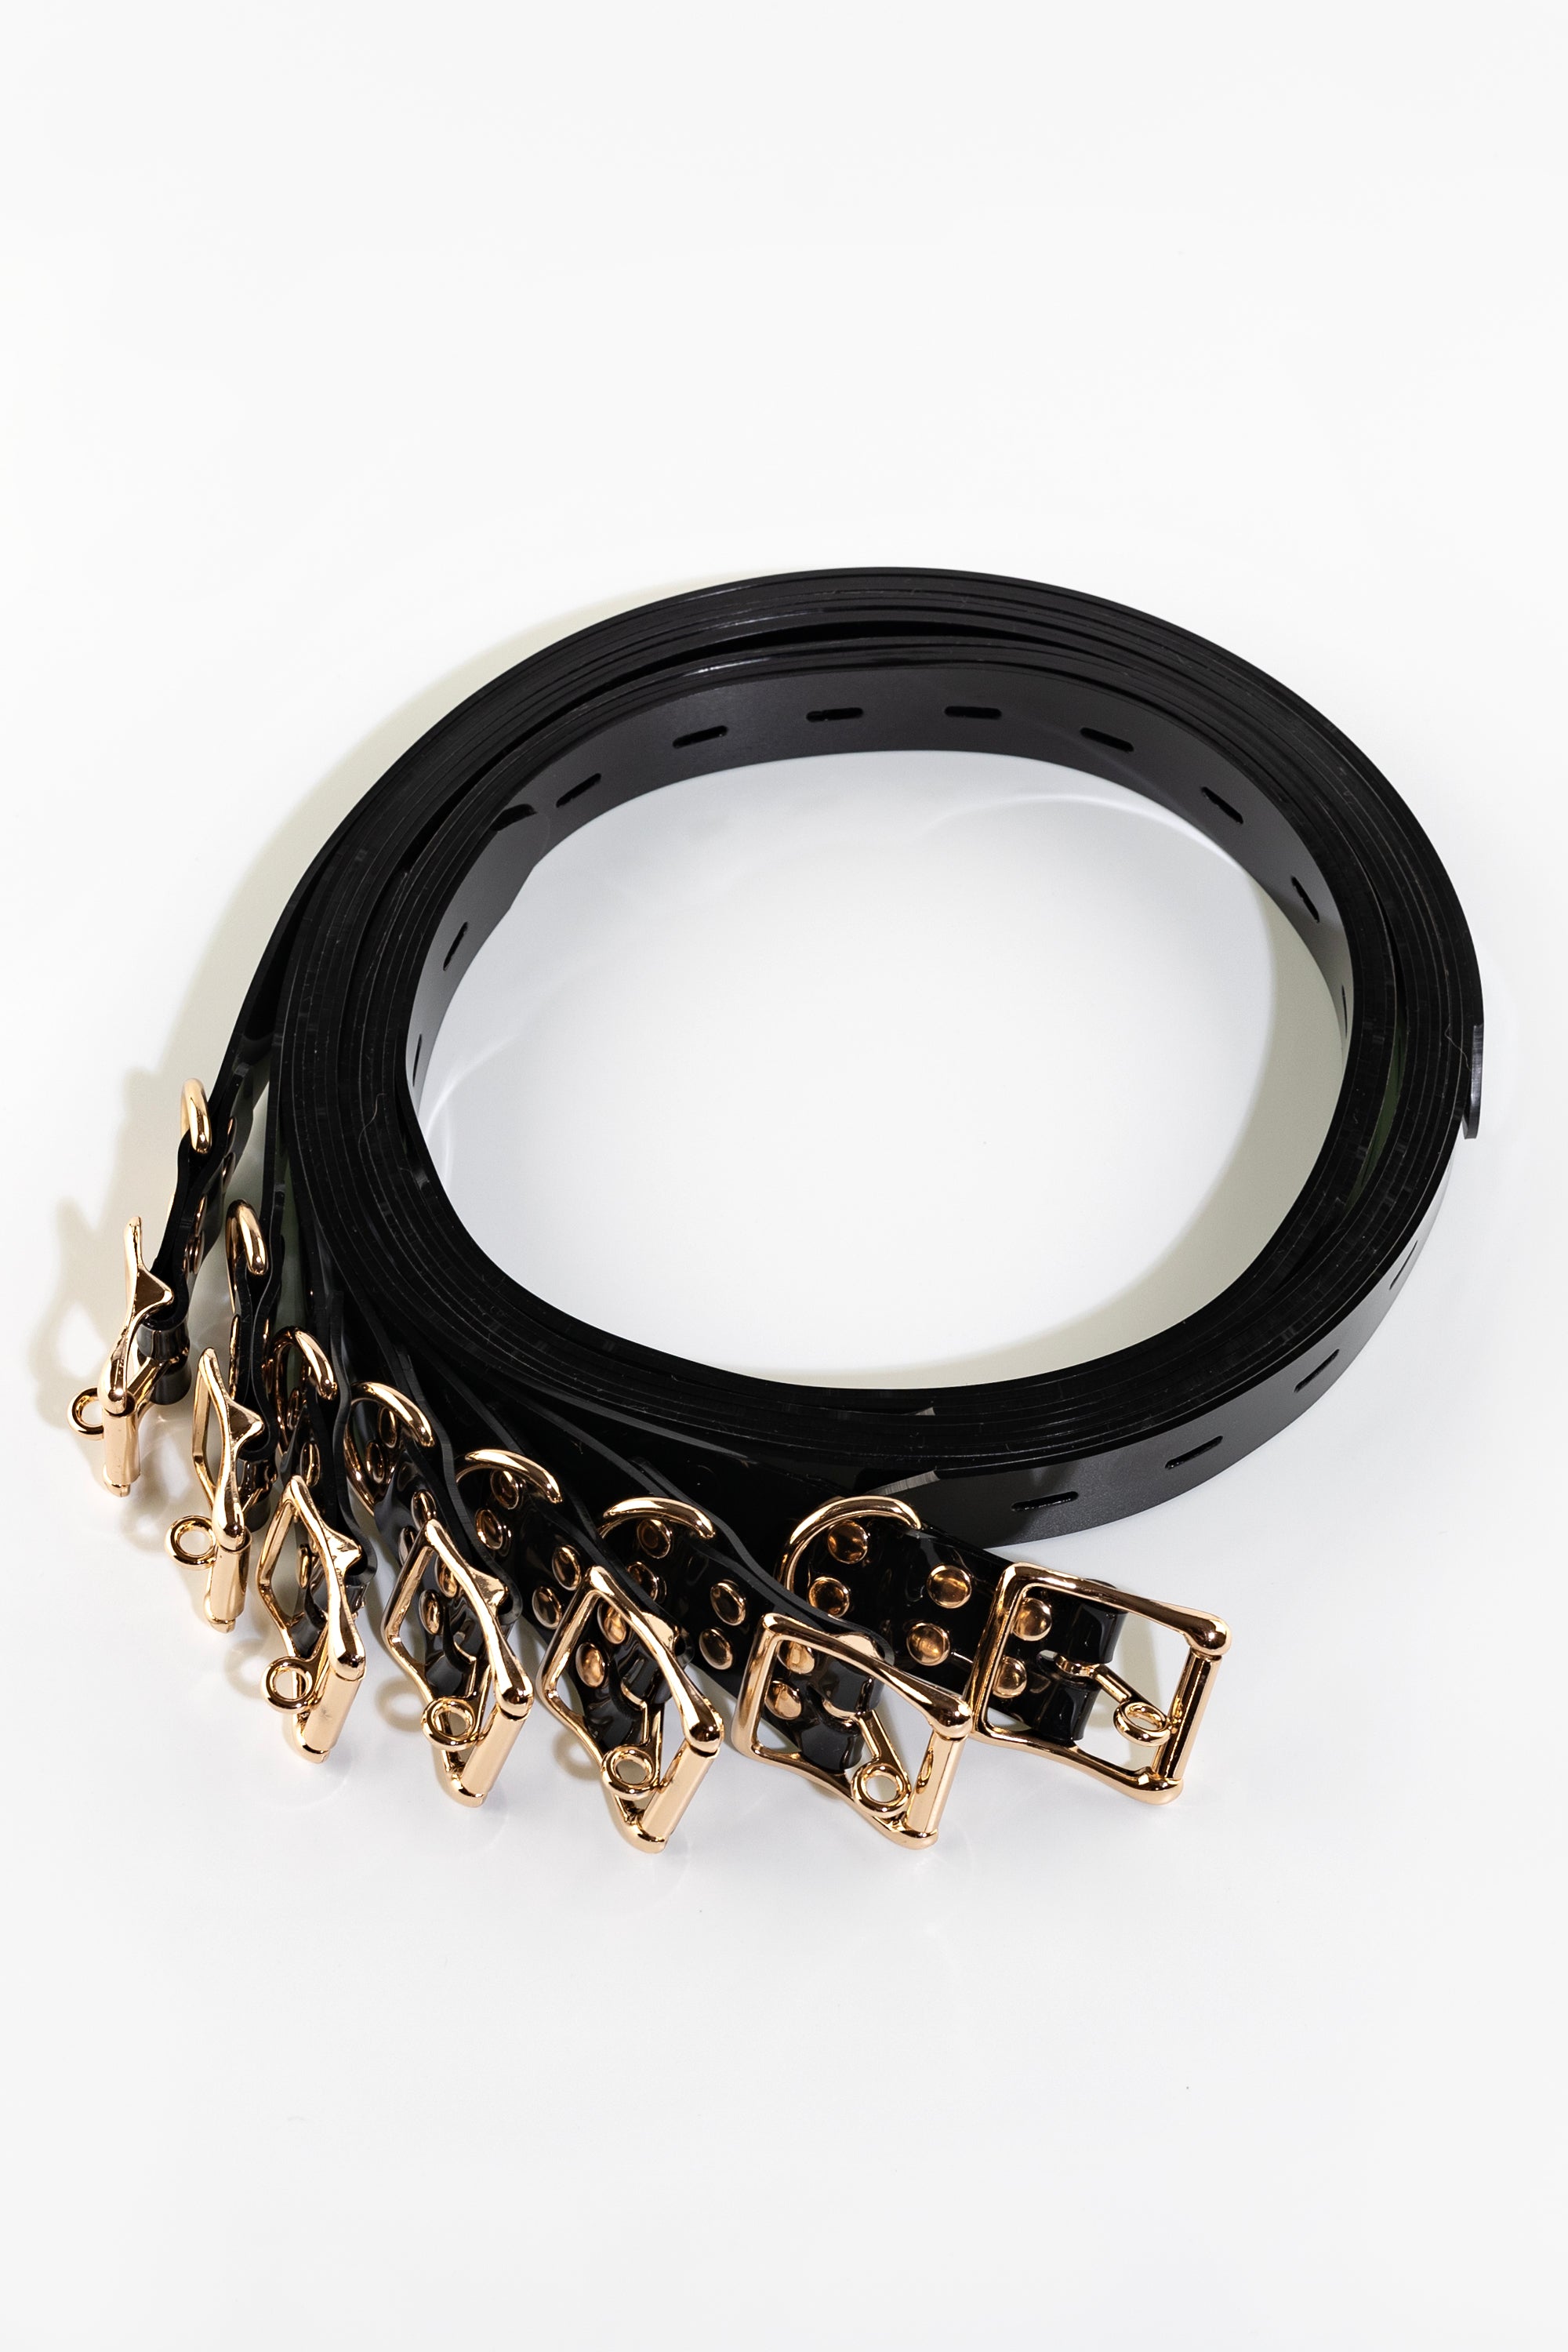 Bondage lockable straps set 25 mm, black/gold